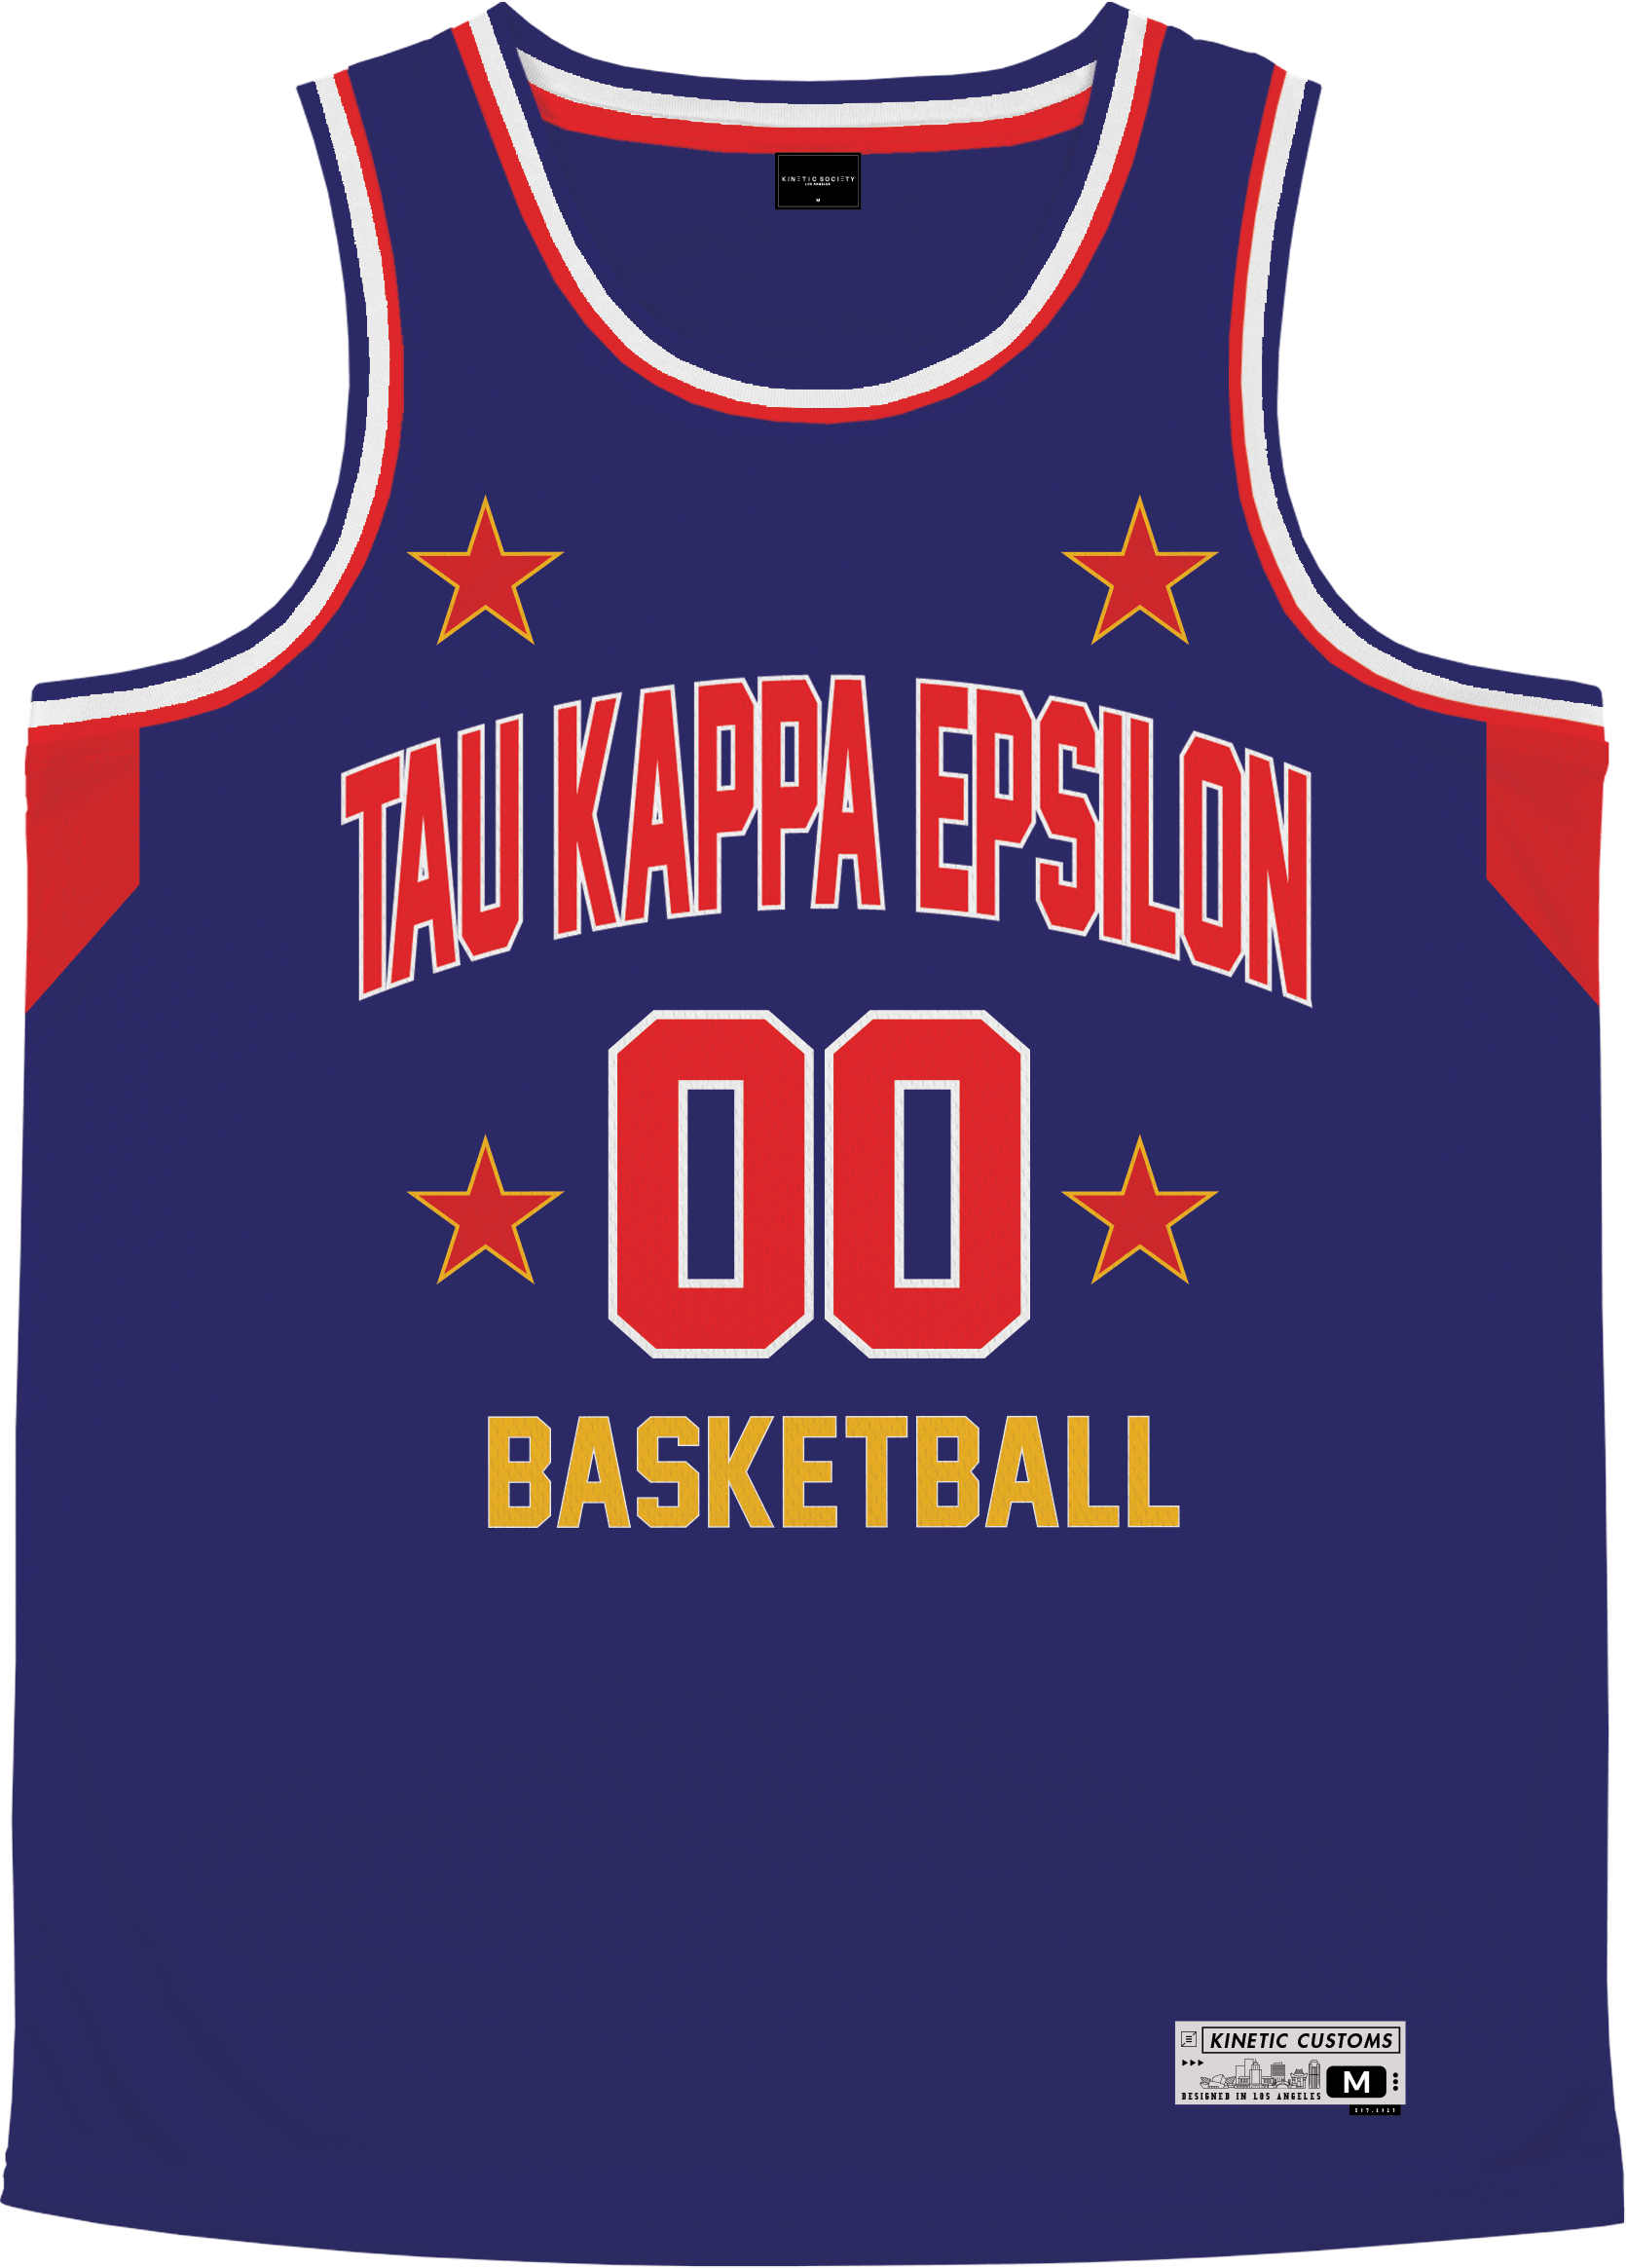 Tau Kappa Epsilon - Retro Ballers Basketball Jersey - Kinetic Society